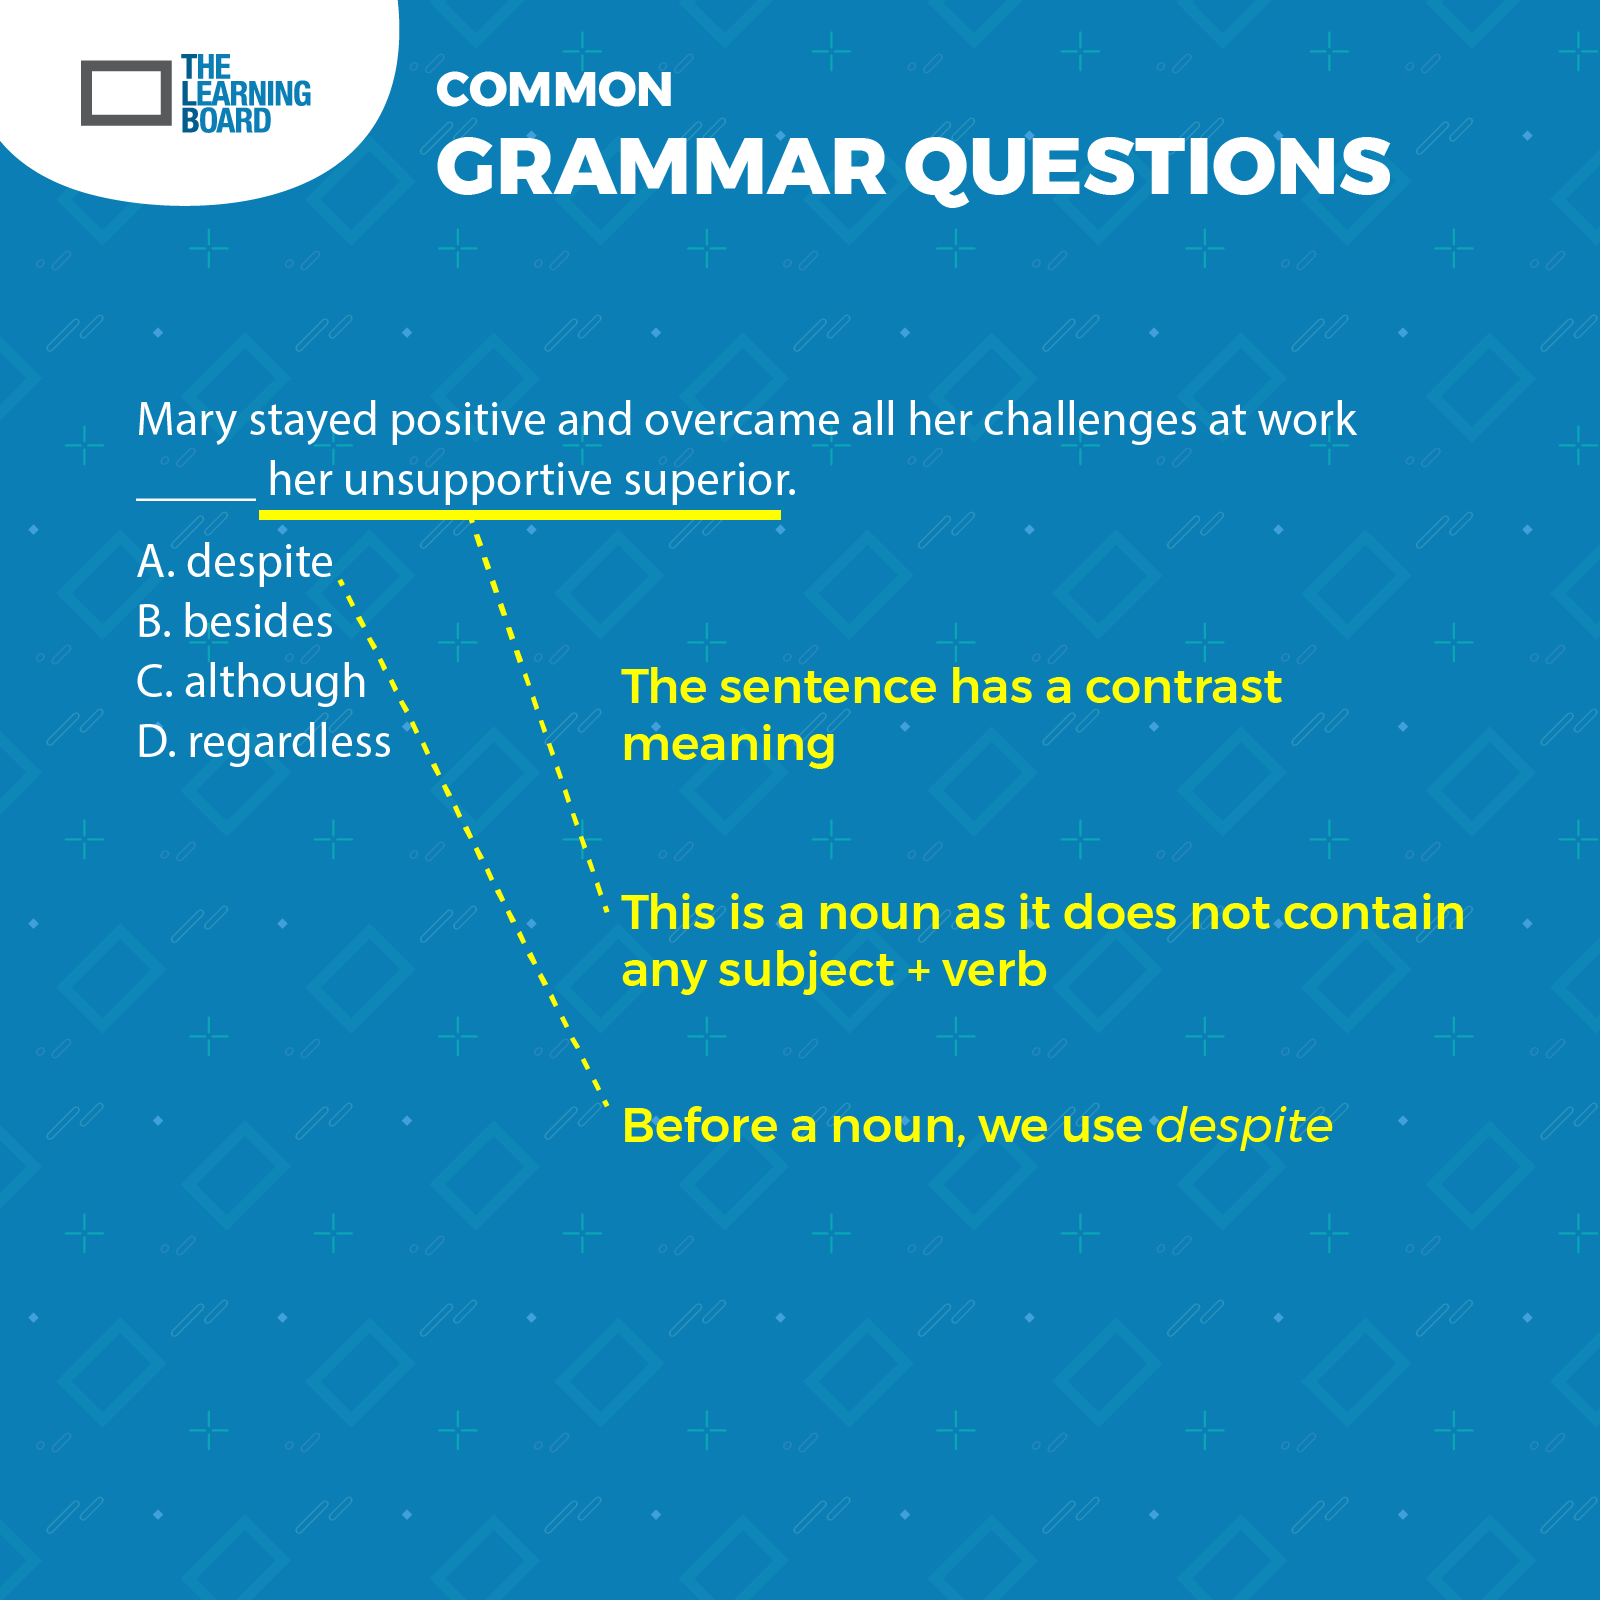 grammar question 6